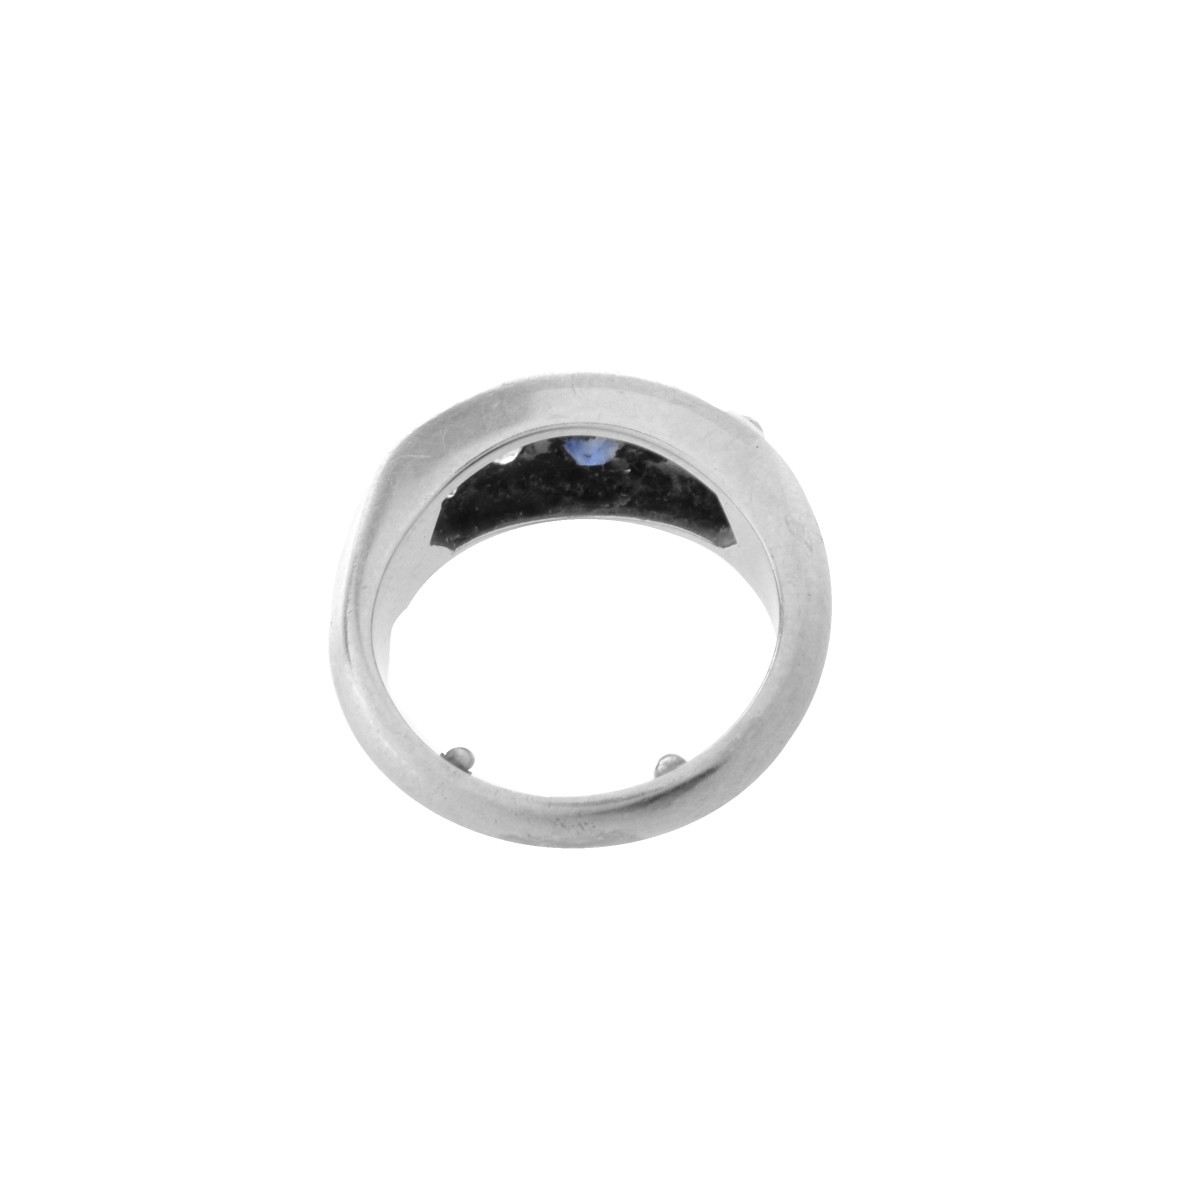 Art Deco Sapphire, Diamond and Platinum Ring